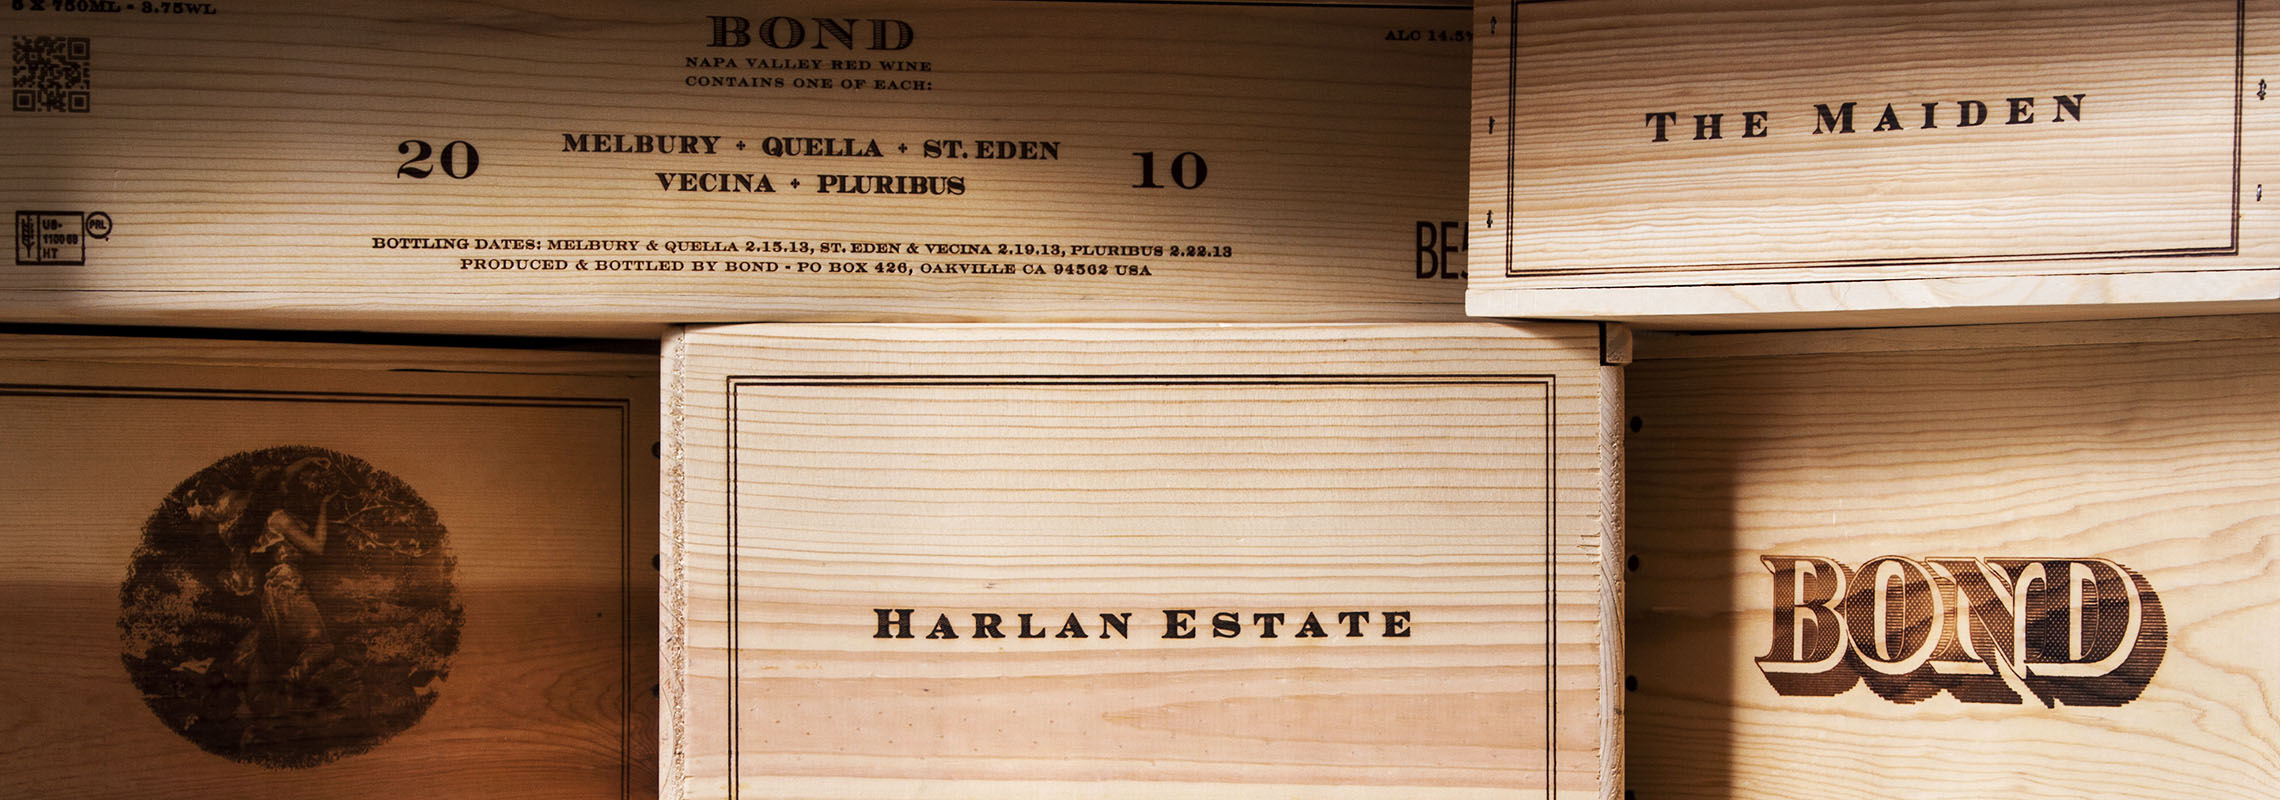 Wine mailing lists - Photo image of Harlan and Bond original wine crates.